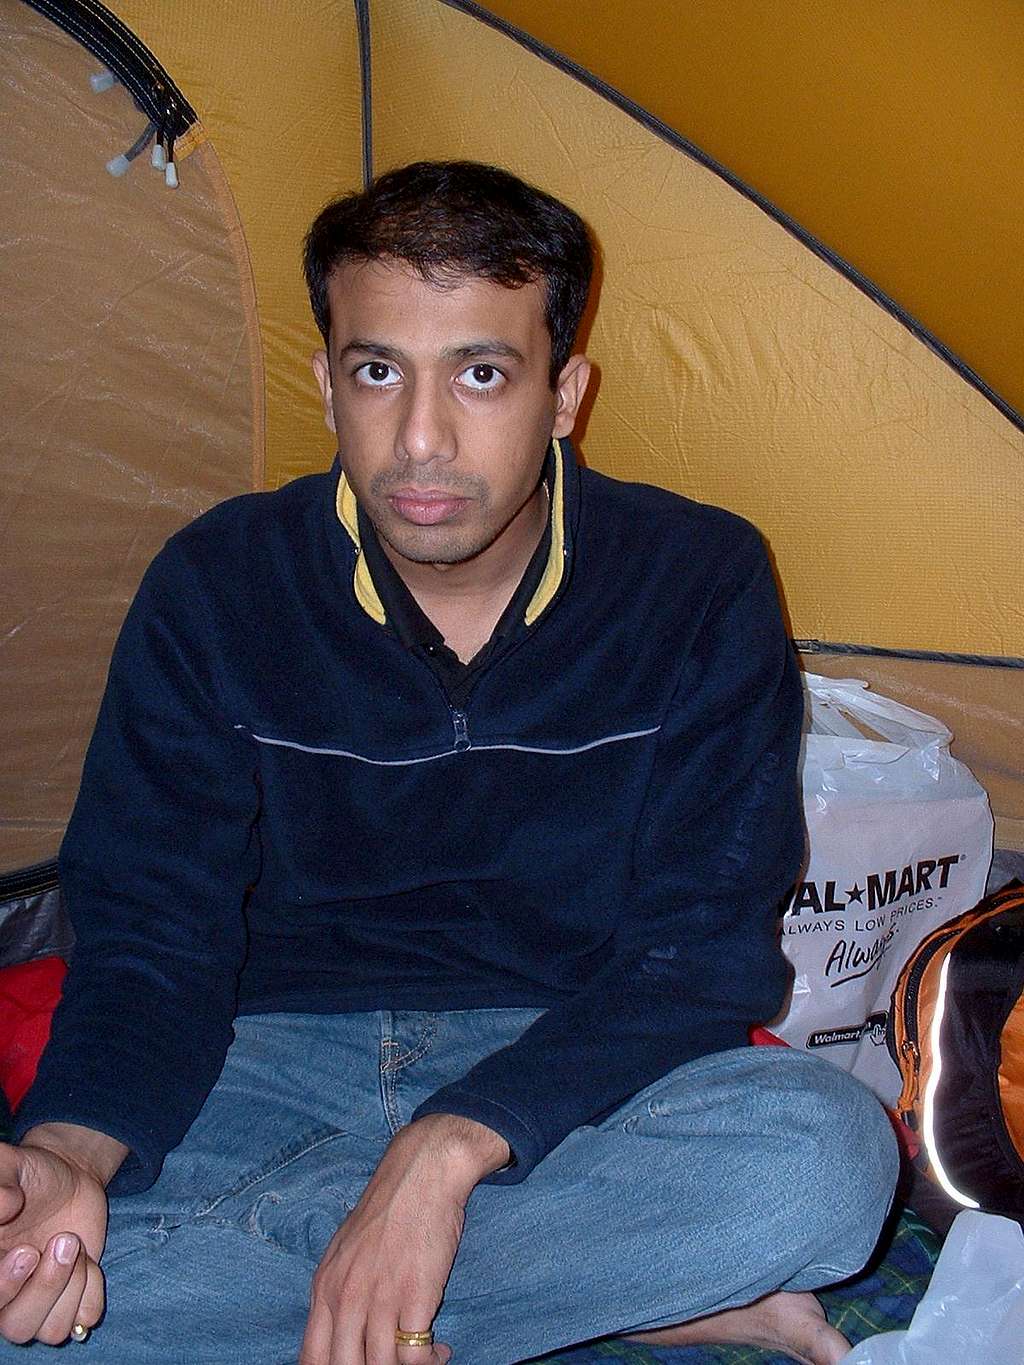 Rakya, in the tent